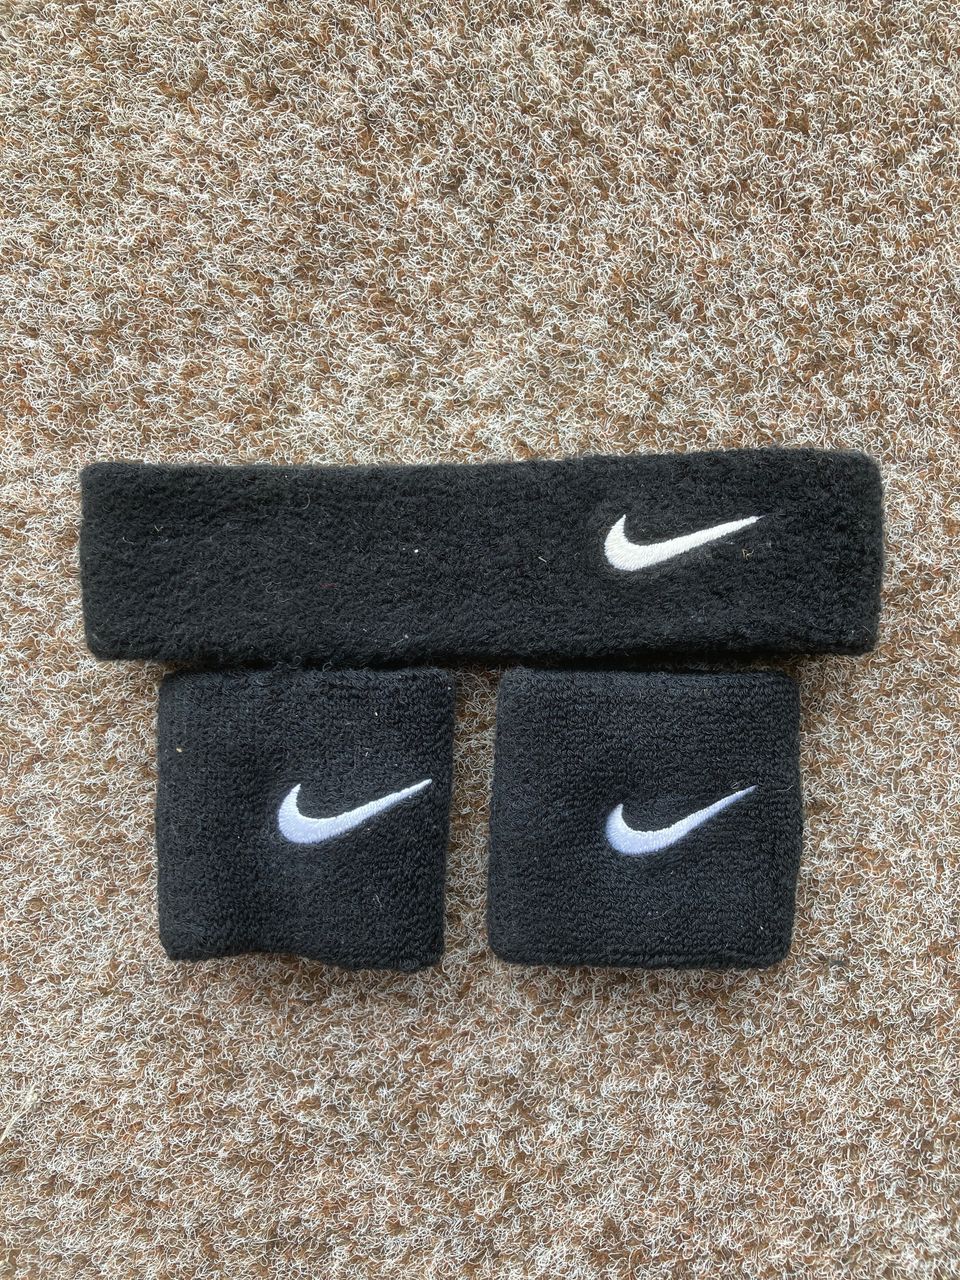 Nike hikinauhat